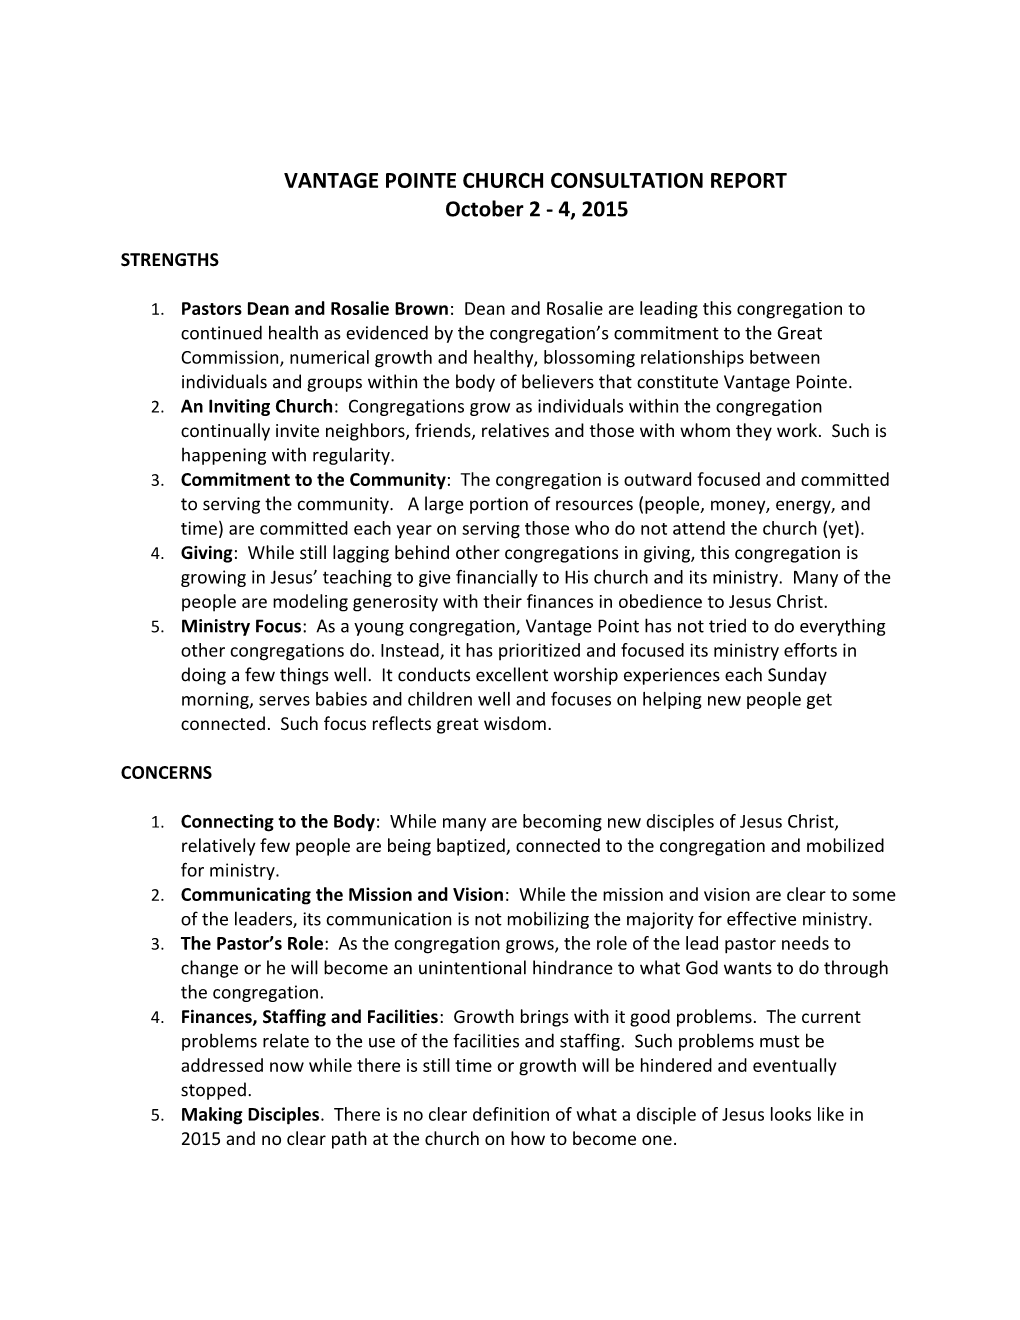 Vantage Pointe Church Consultation Report